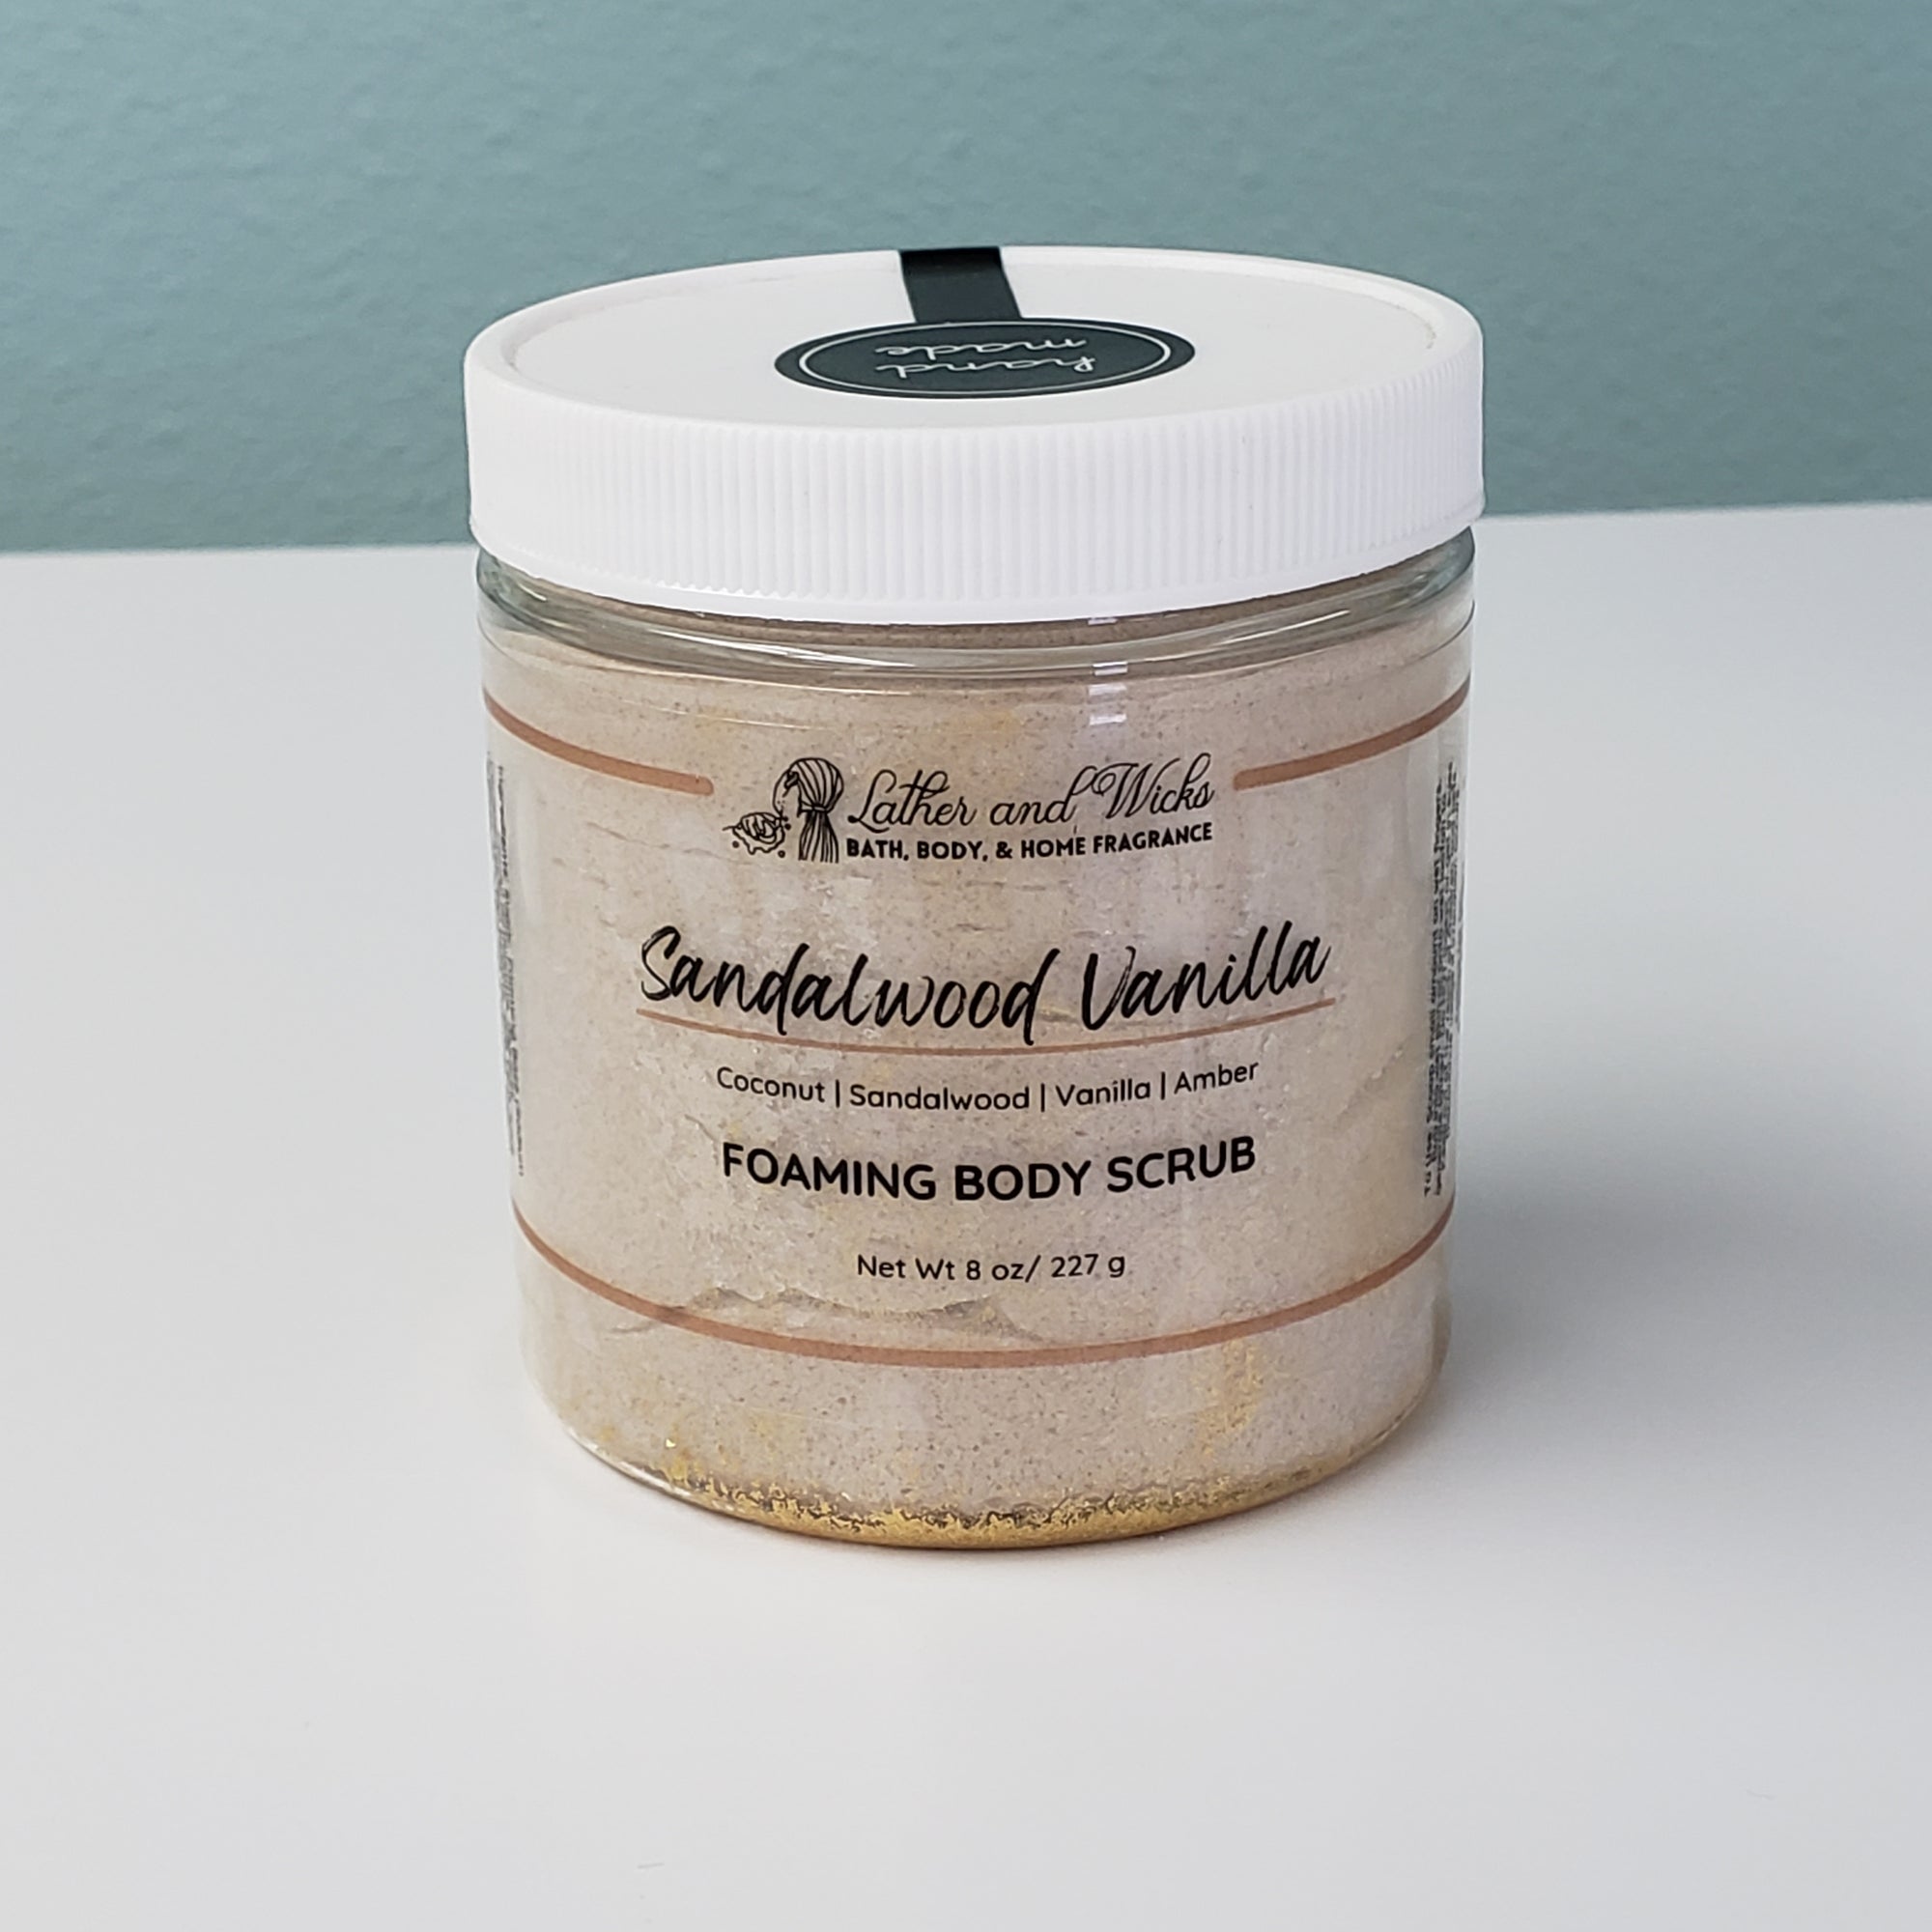 Sandalwood Vanilla Foaming Body Scrub 8 oz jar Lather and Wicks